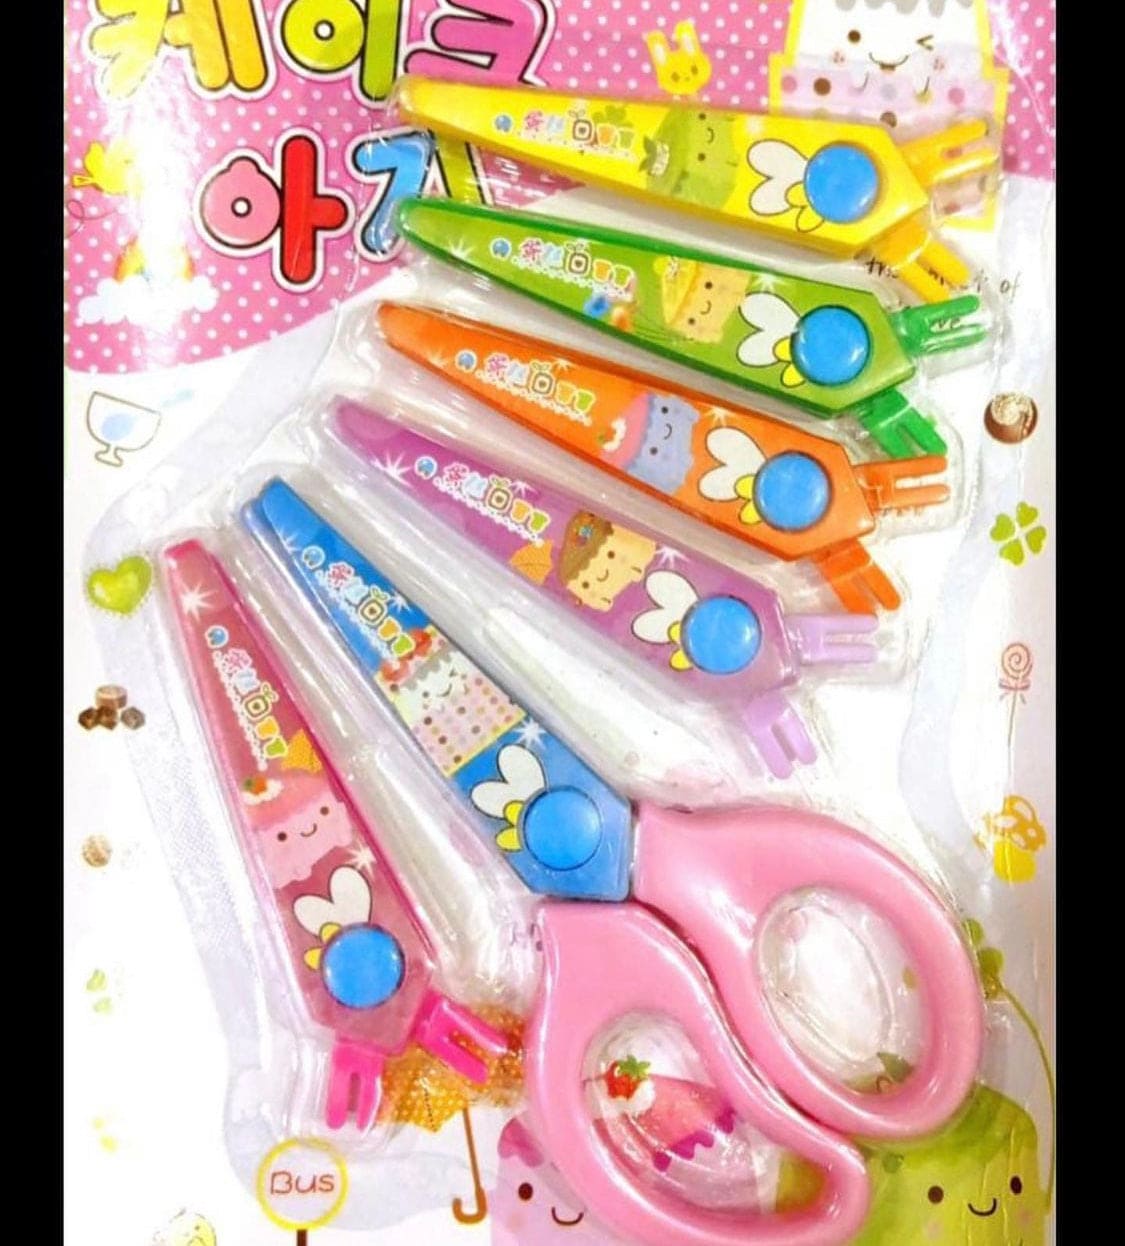 Set Of 6 Multistyle Scissor, All Plastic Children Safety Scissors, Toddler Handmade Round Head Scissors Stationary